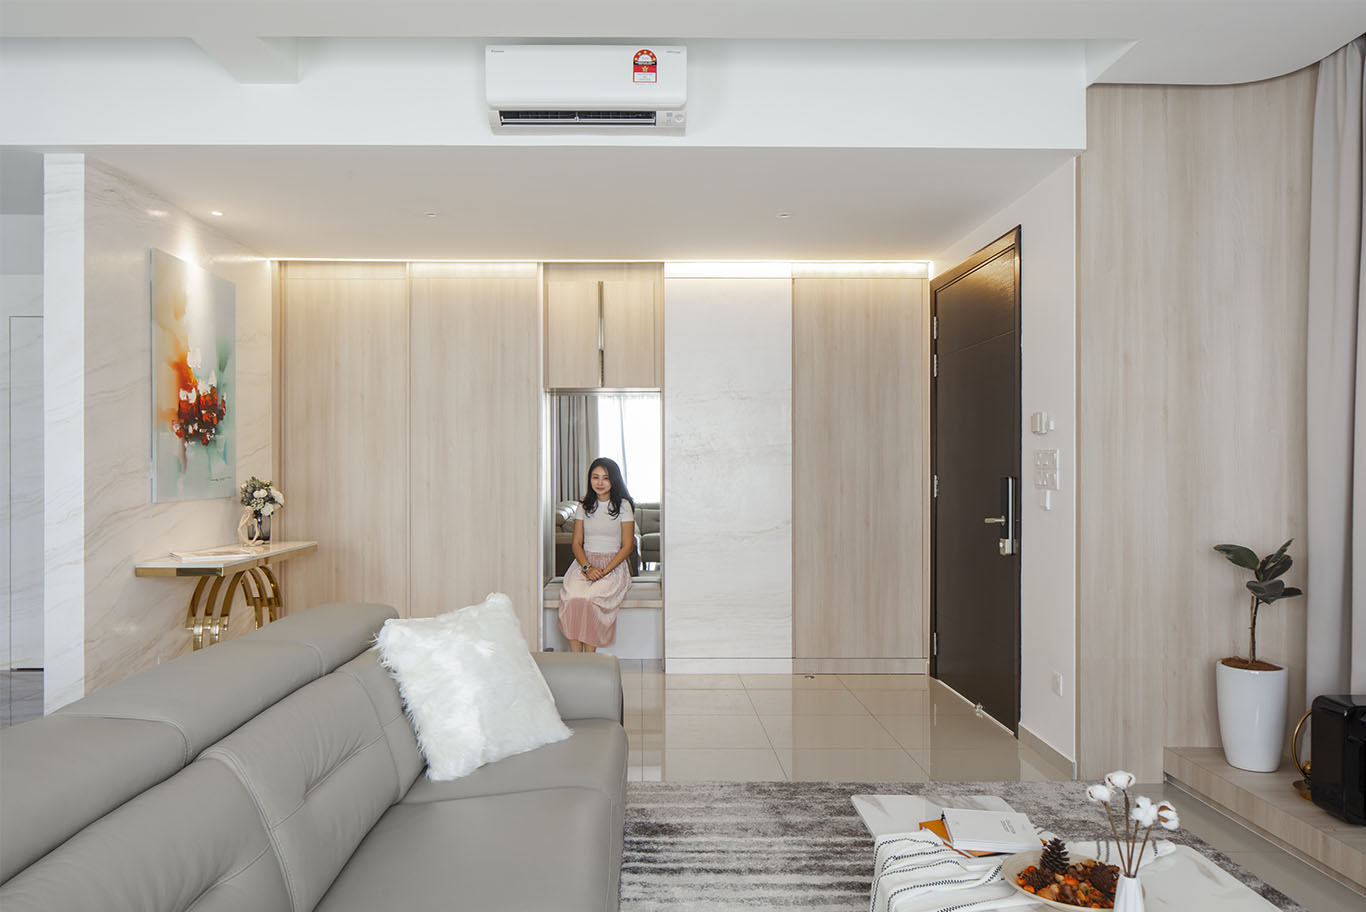 Grande Rhapsody minimalist living room with hidden sitting area Mieux interior design